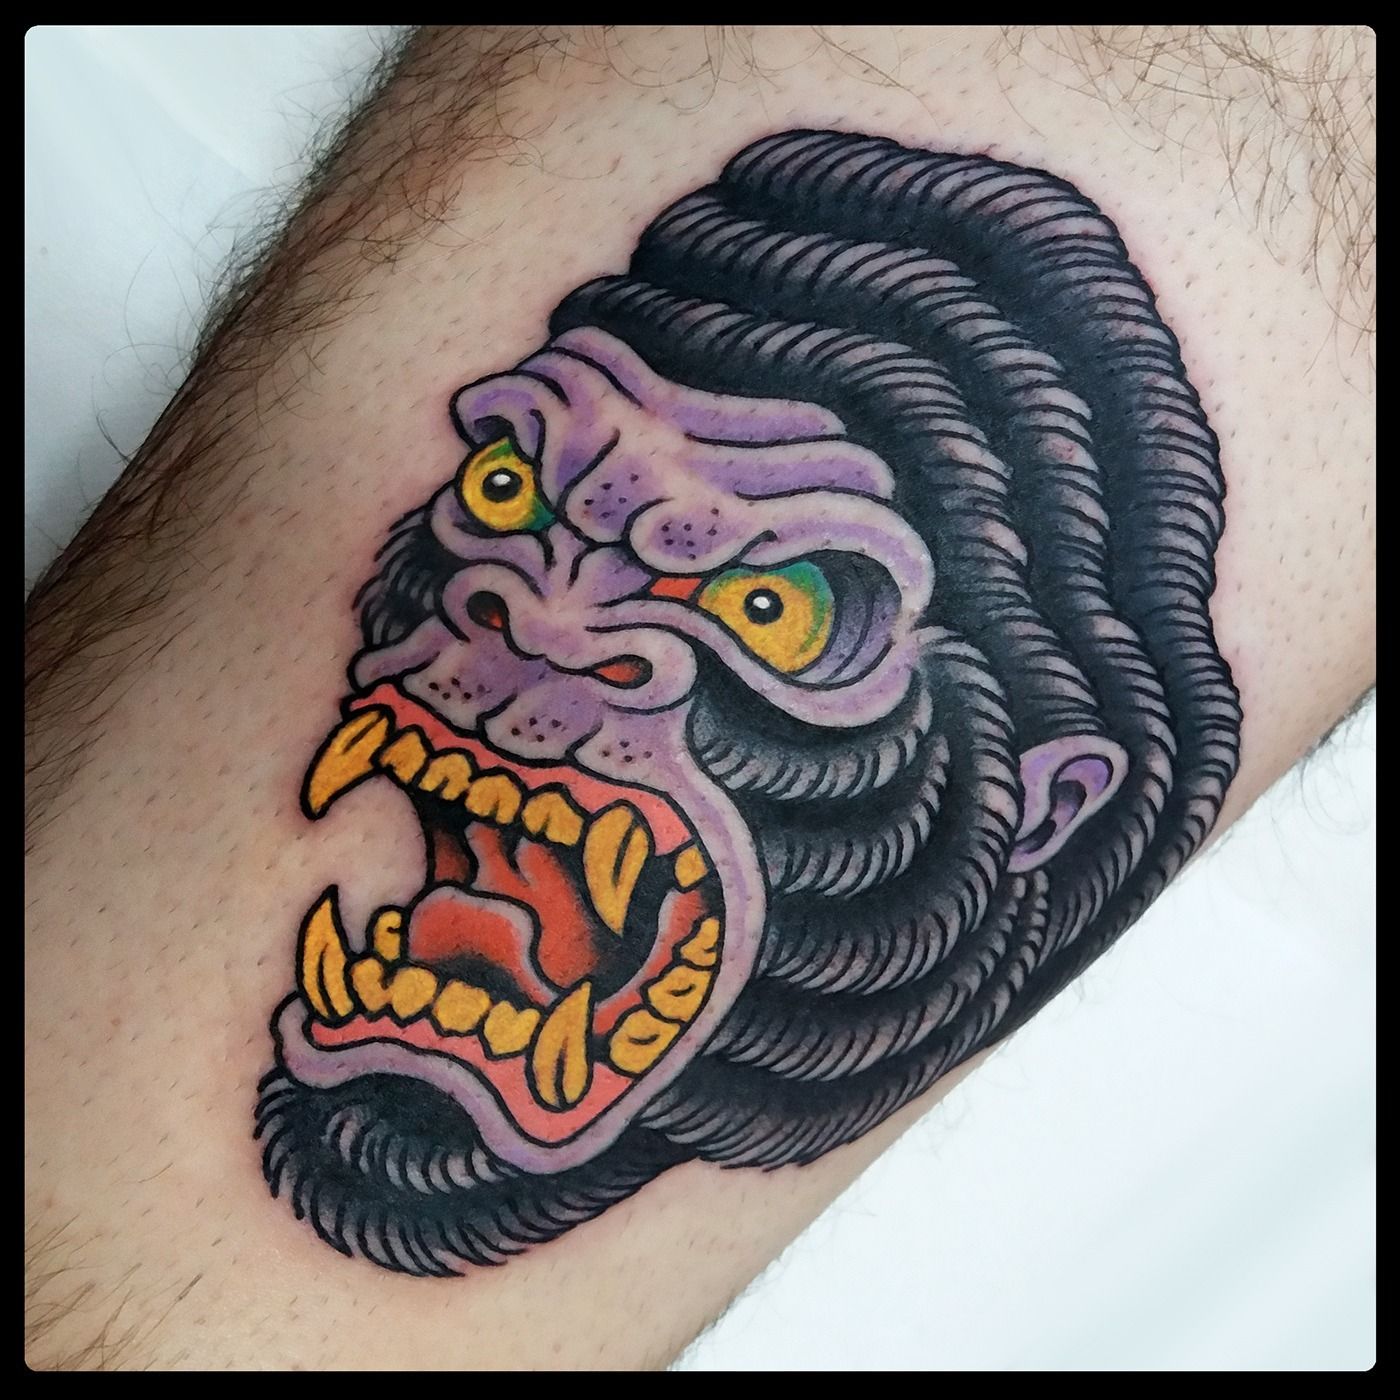 20 Neo Traditional Gorilla Tattoo Designs For Men  Ape Ink Ideas